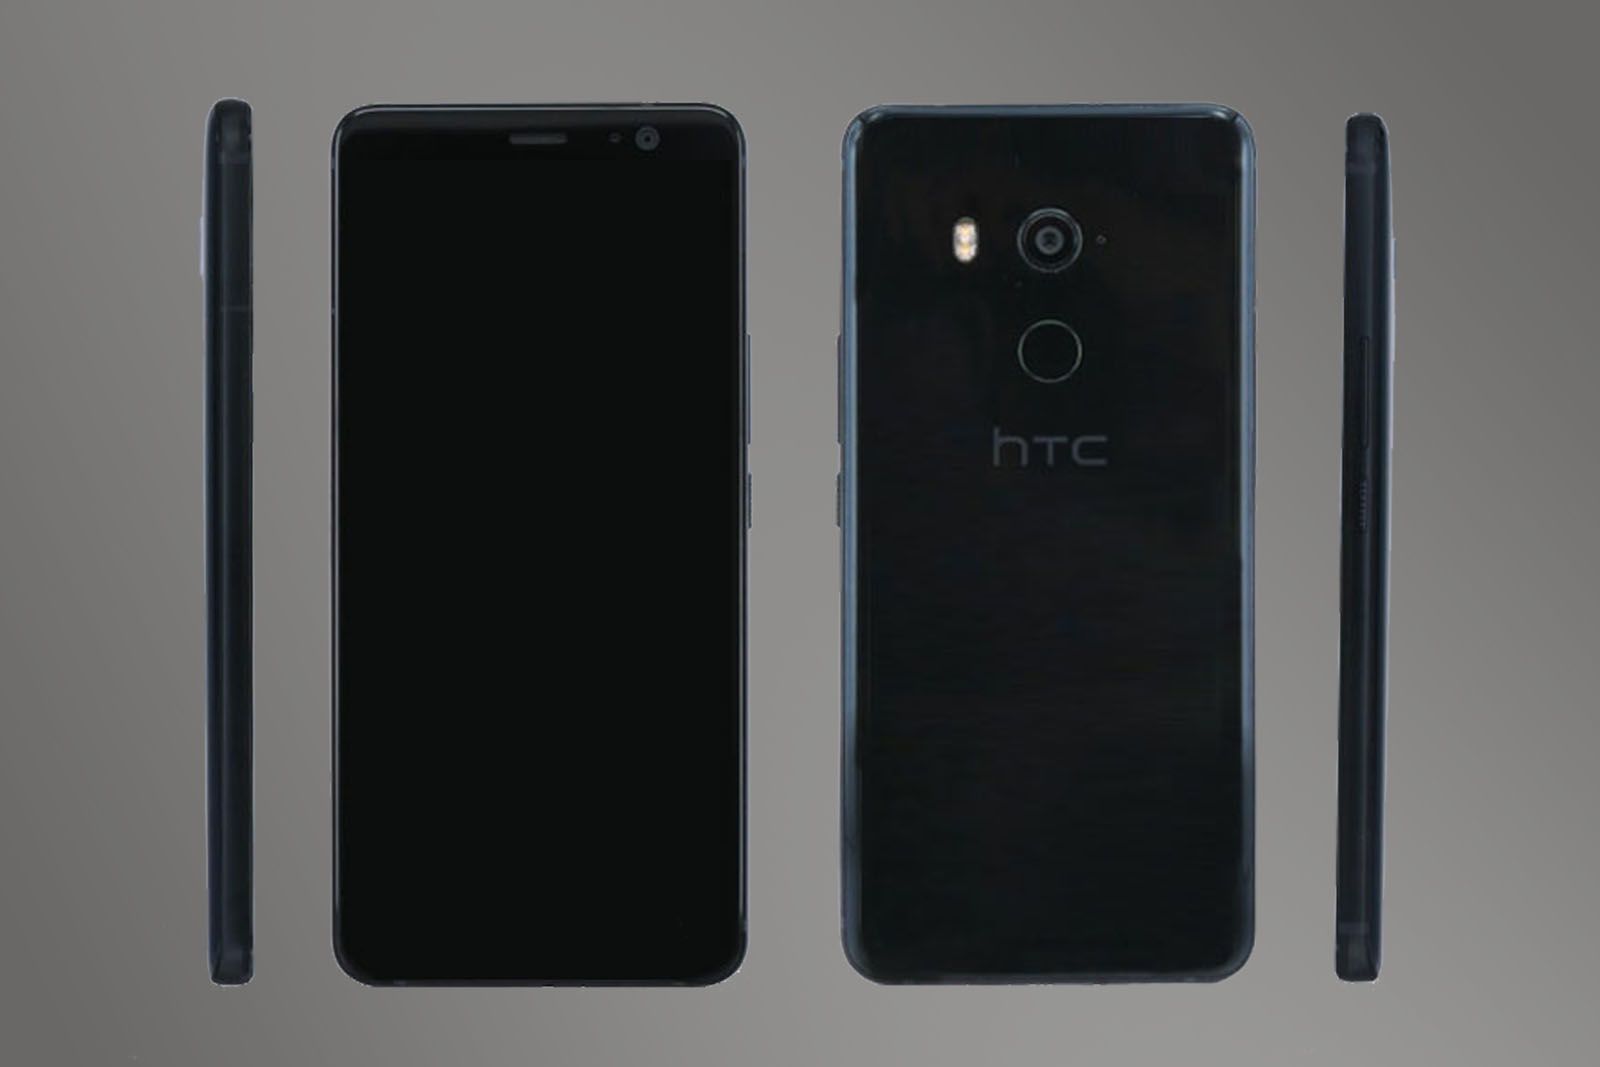 HTC U11 Plus photos reveal stunning future phone image 1